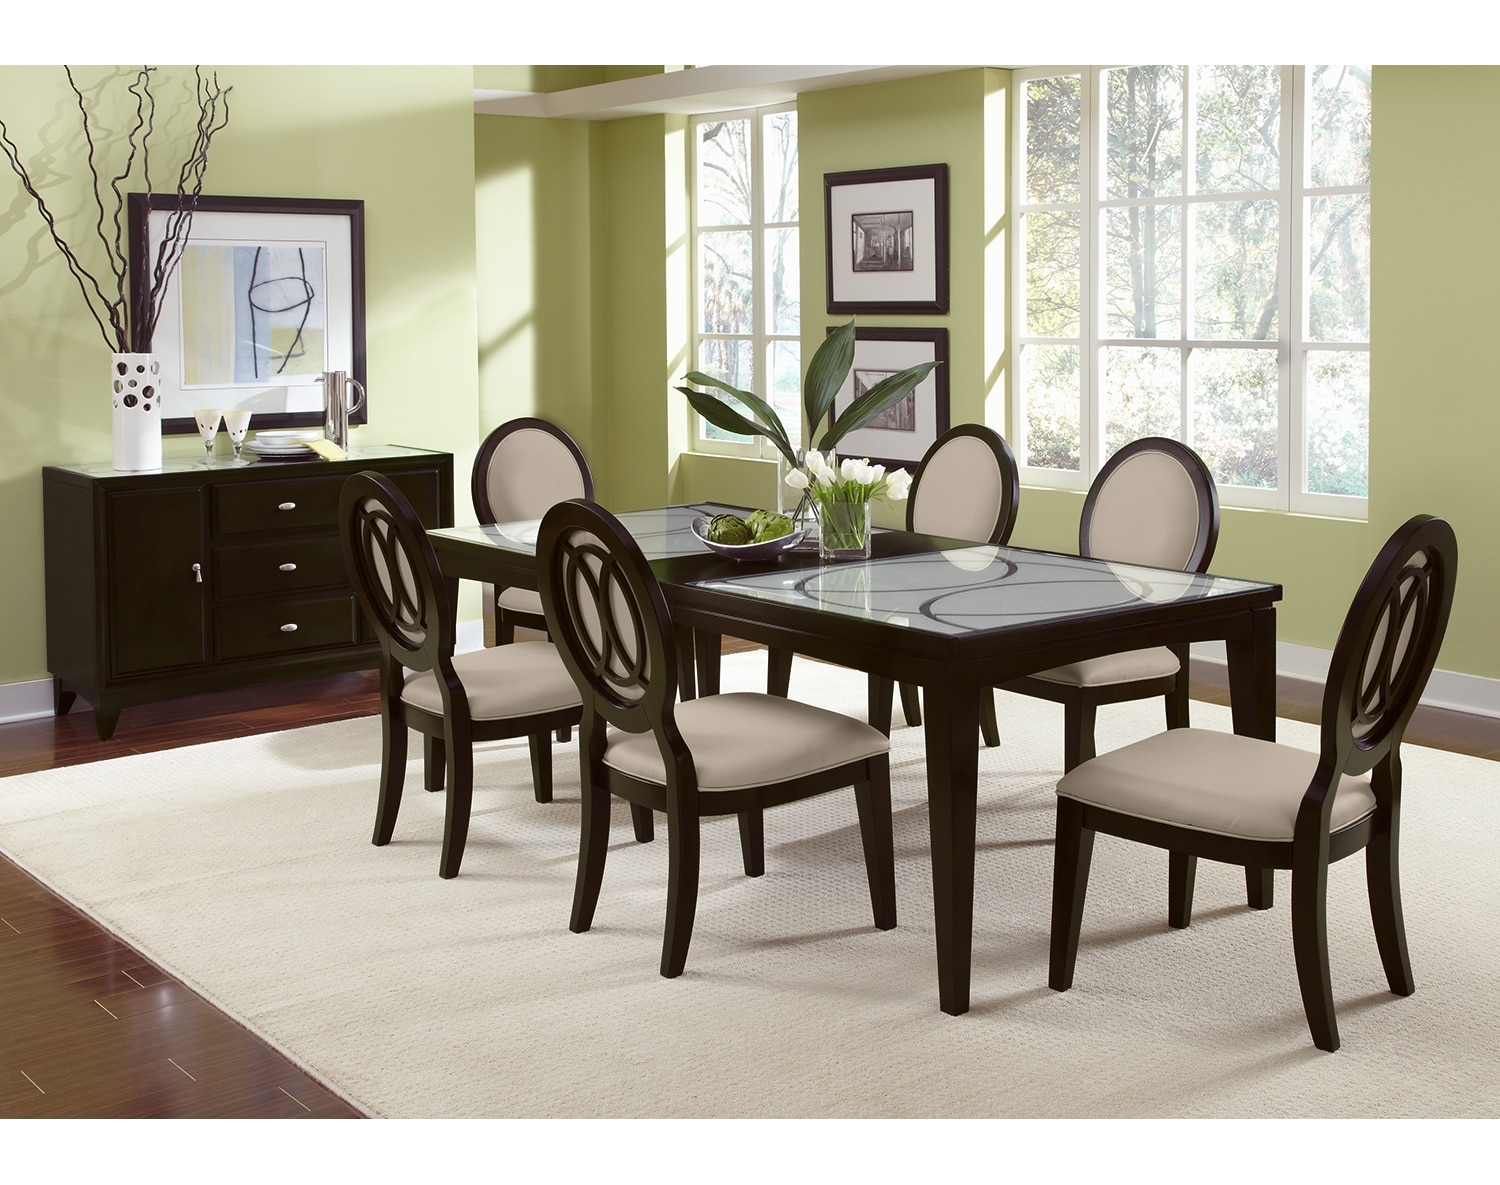 Dining Room Furniture Brands American Signature Furniture